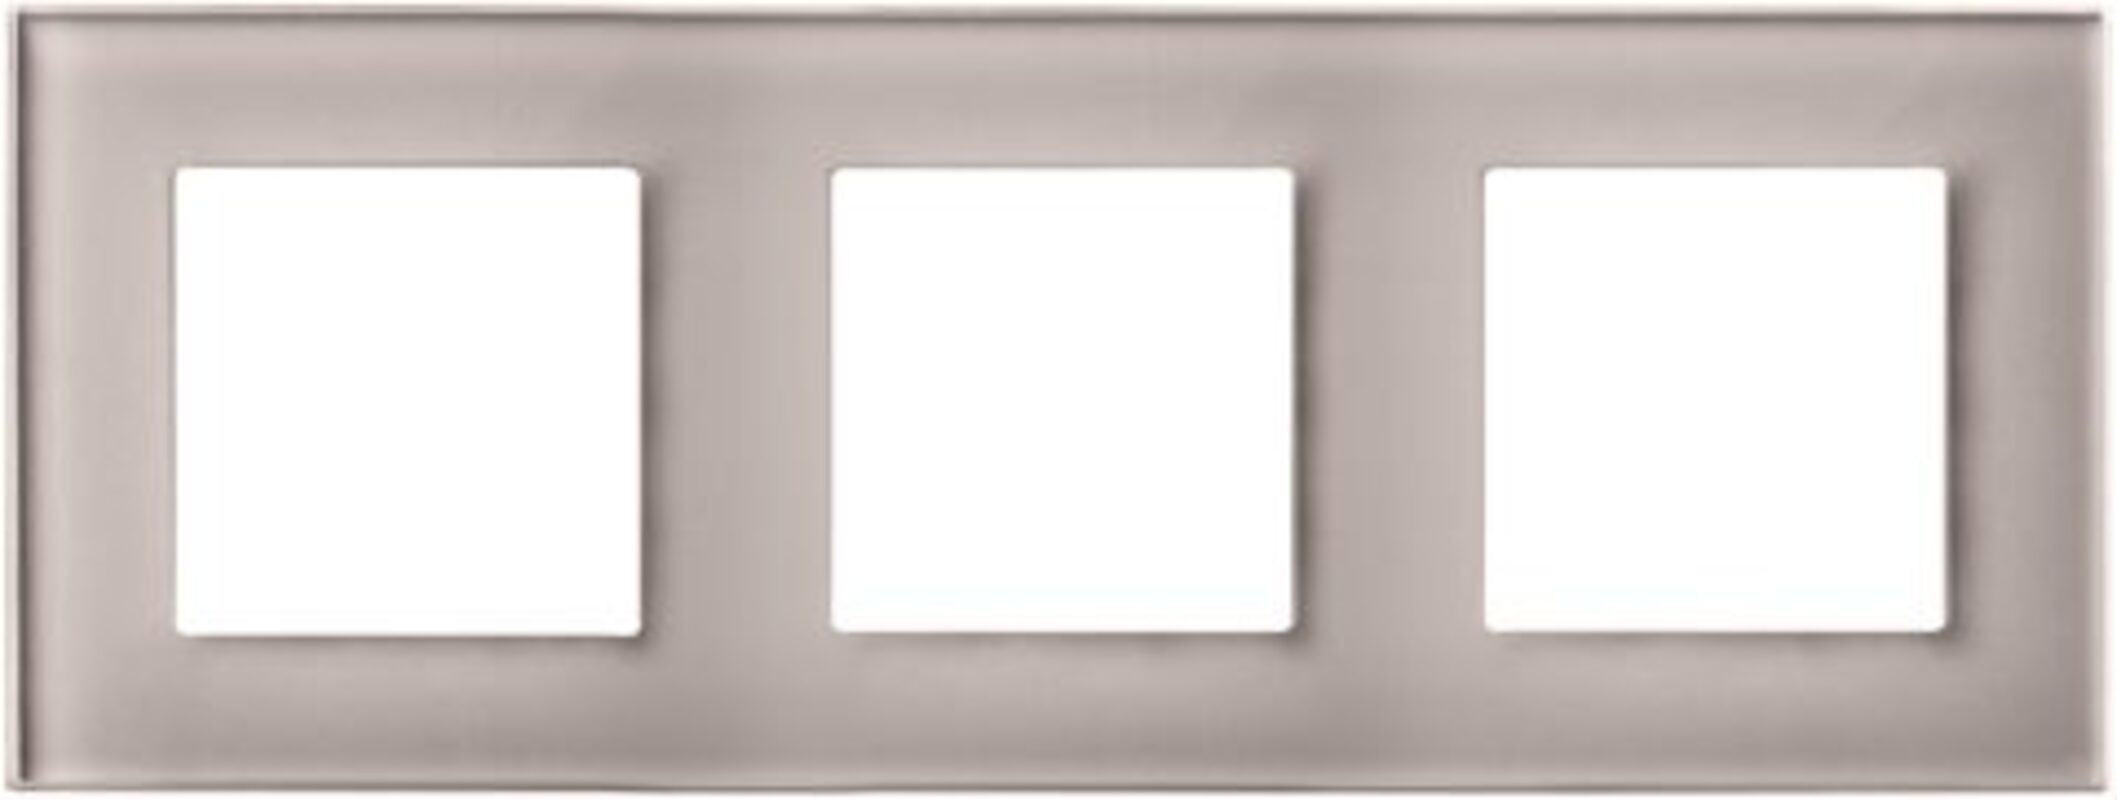 91077711 Рамка для розеток и выключателей GL-P103-LSG 3 поста цвет дымчатый Эстетика STLM-0472181 CGSS